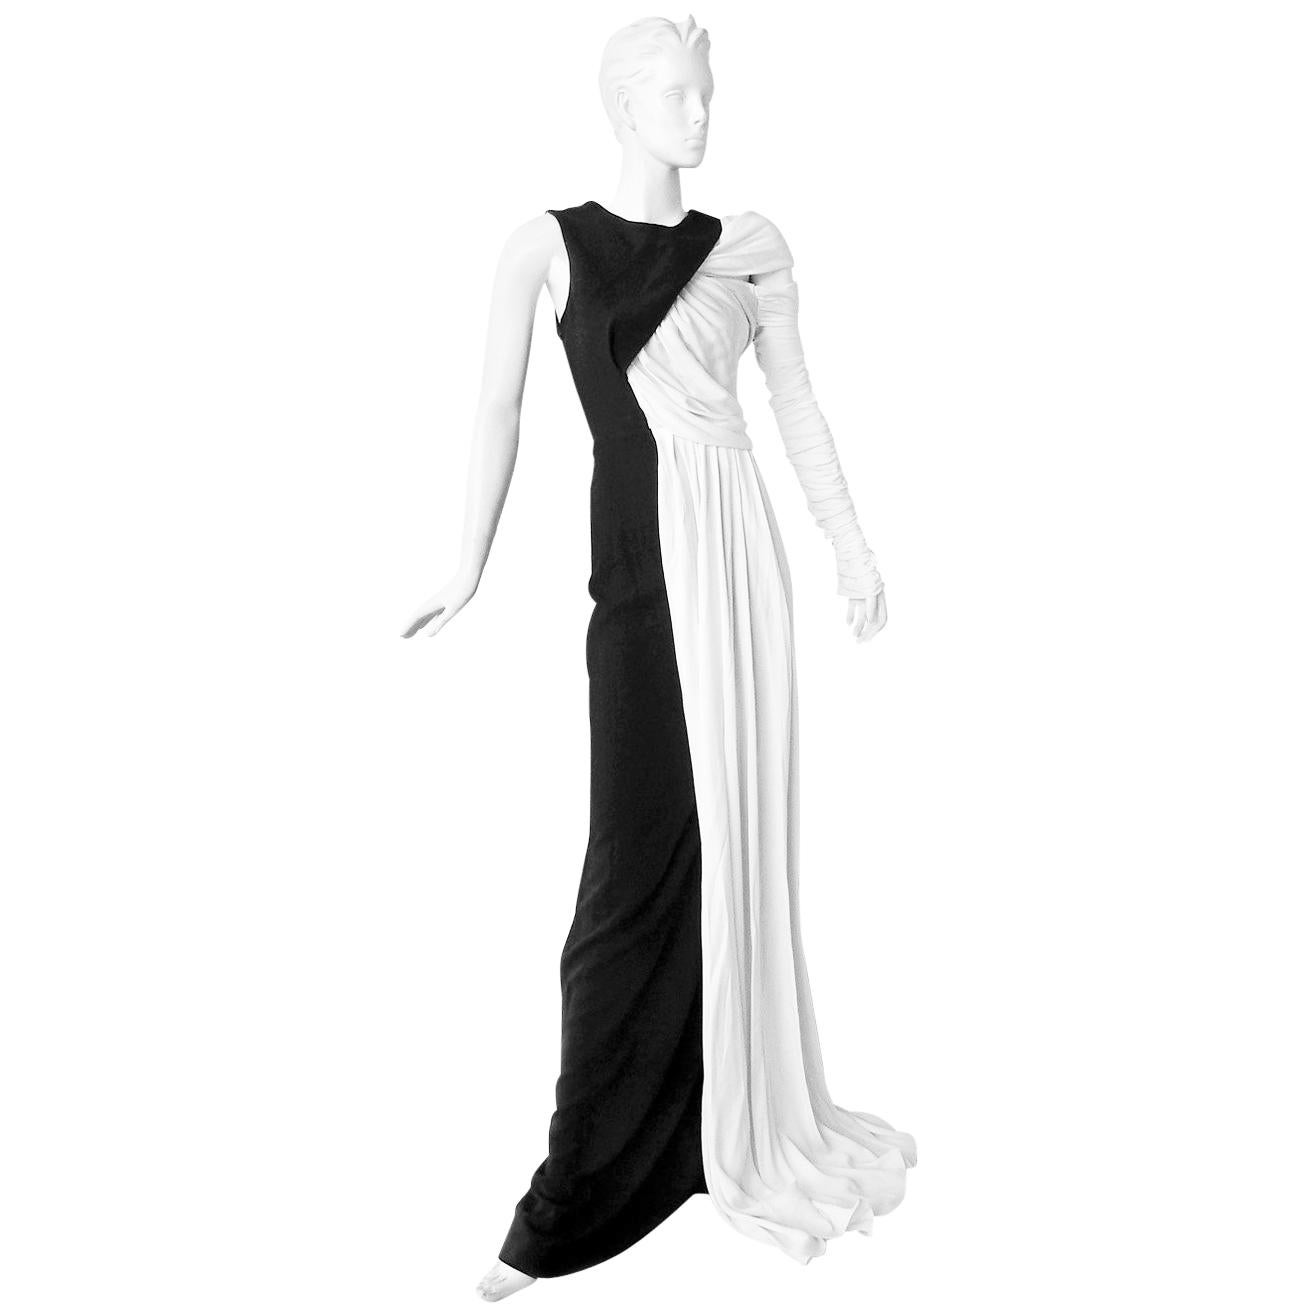 Vionnet Grecian Draped Single Shoulder  Black & White Dress Gown 